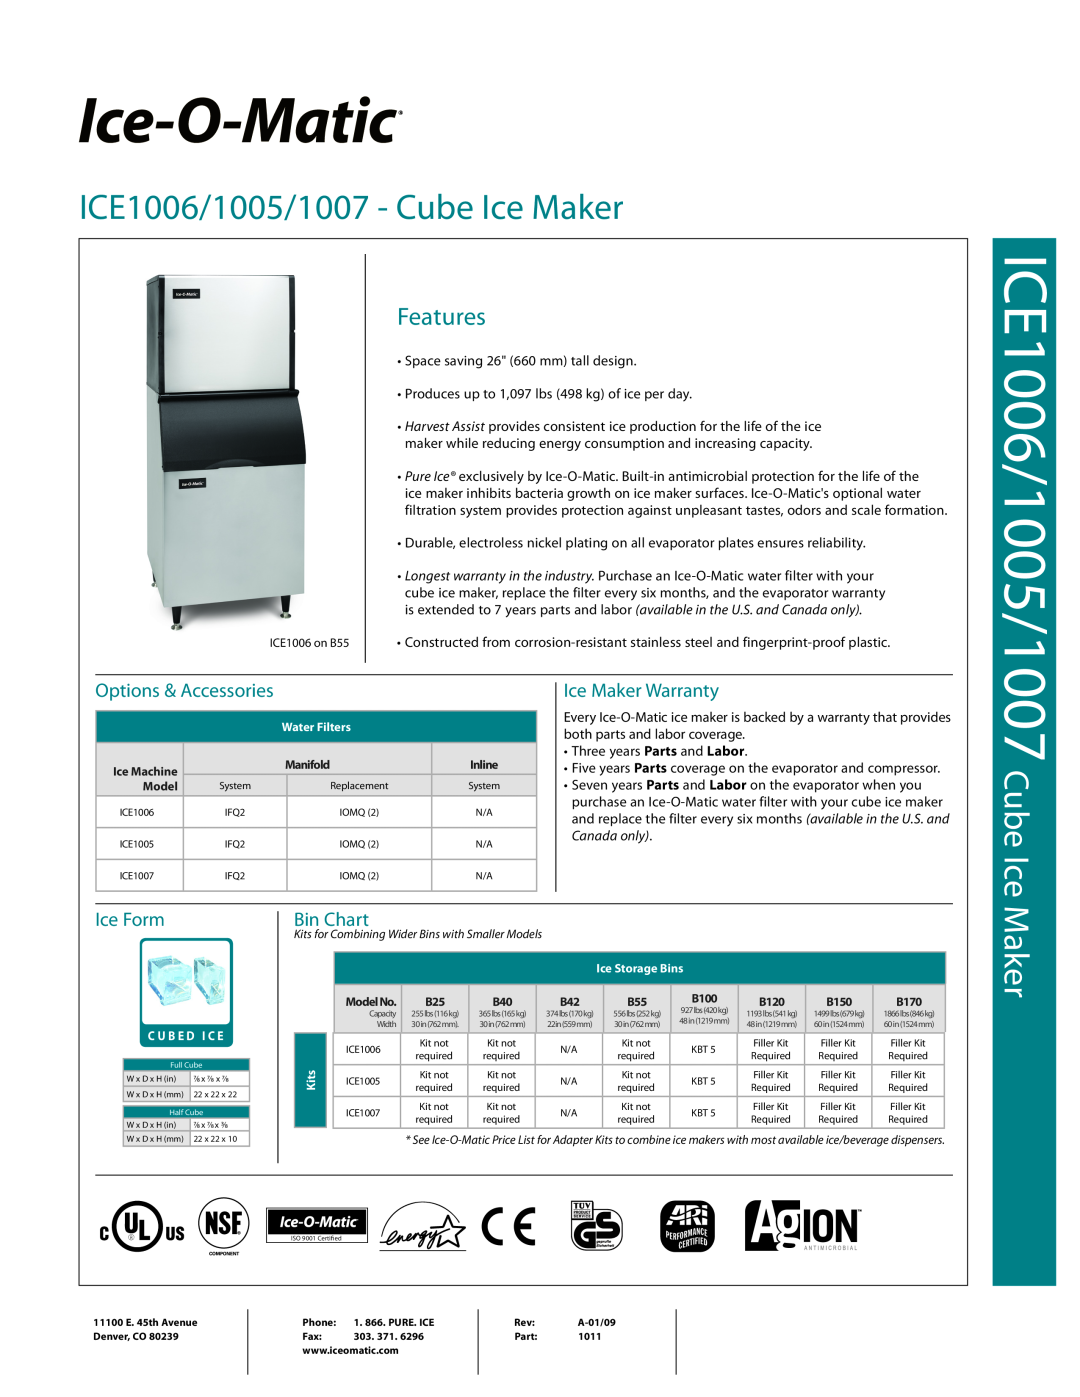 Ice-O-Matic ICE1005 warranty Options & Accessories, Ice Maker Warranty, Ice Form, Bin Chart, ICE1006/1005/1007 